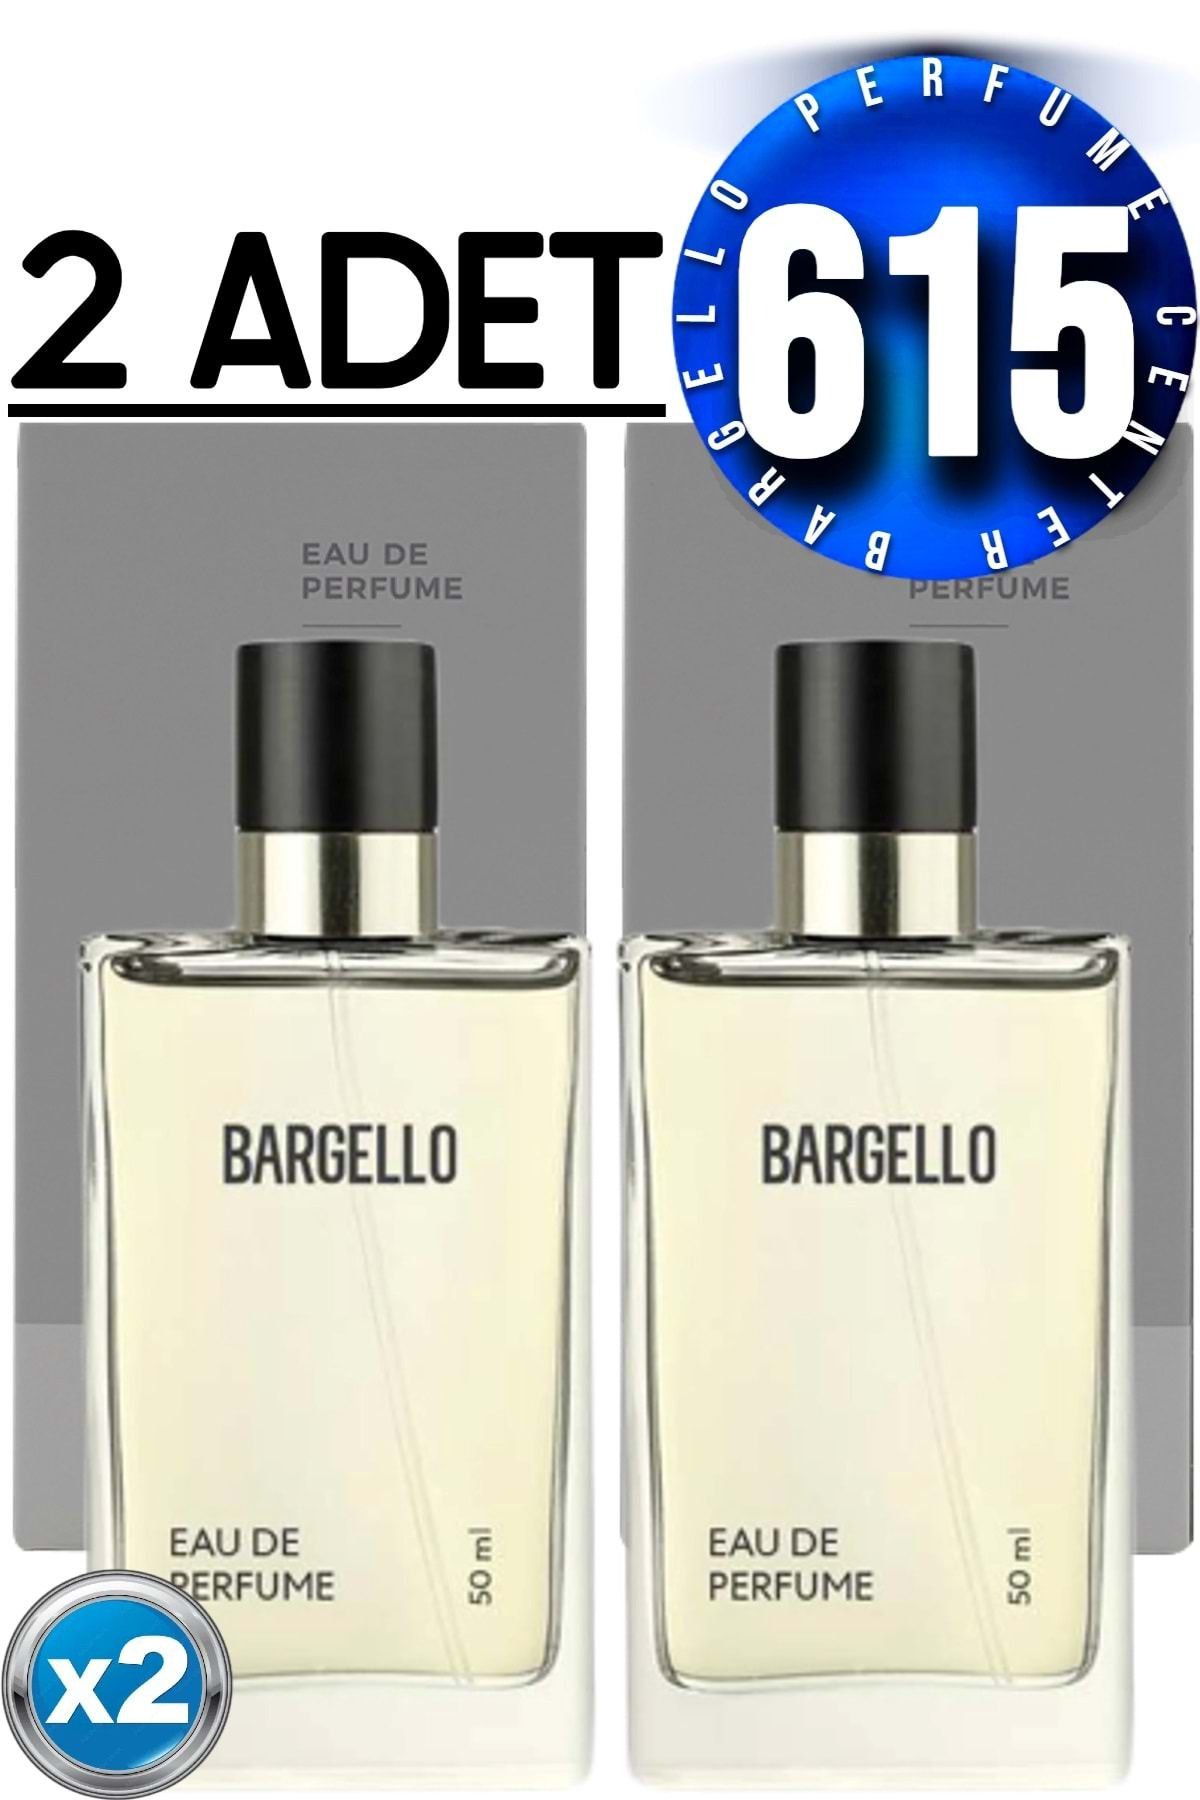 Bargello 615 Edp Fresh Erkek Parfüm 2 Adet 50 ml